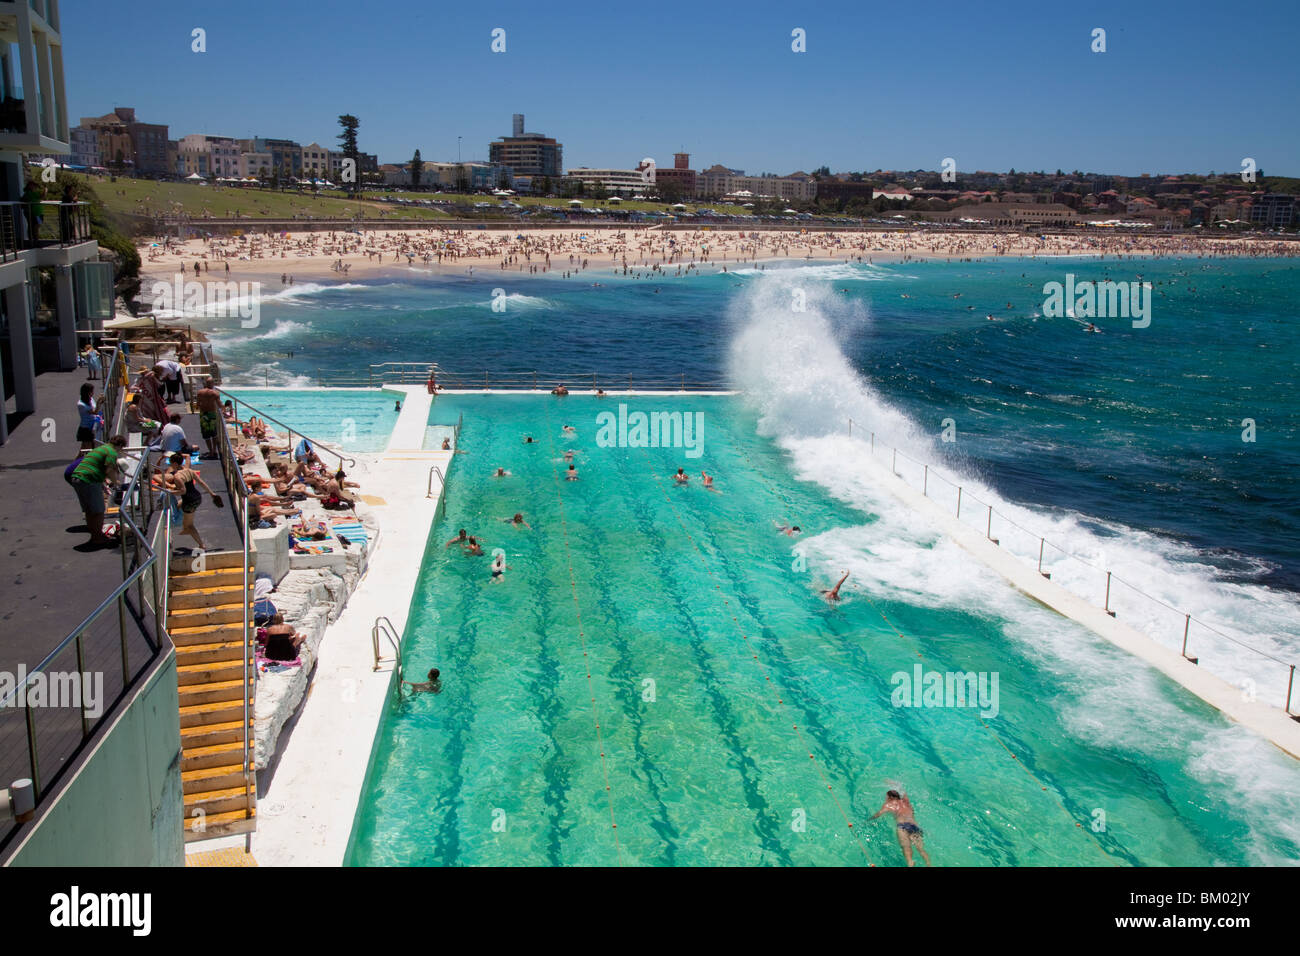 Bondi Icebergs - a popular rock swimming pool that looks over Bondi beach, Sydney. Stock Photo